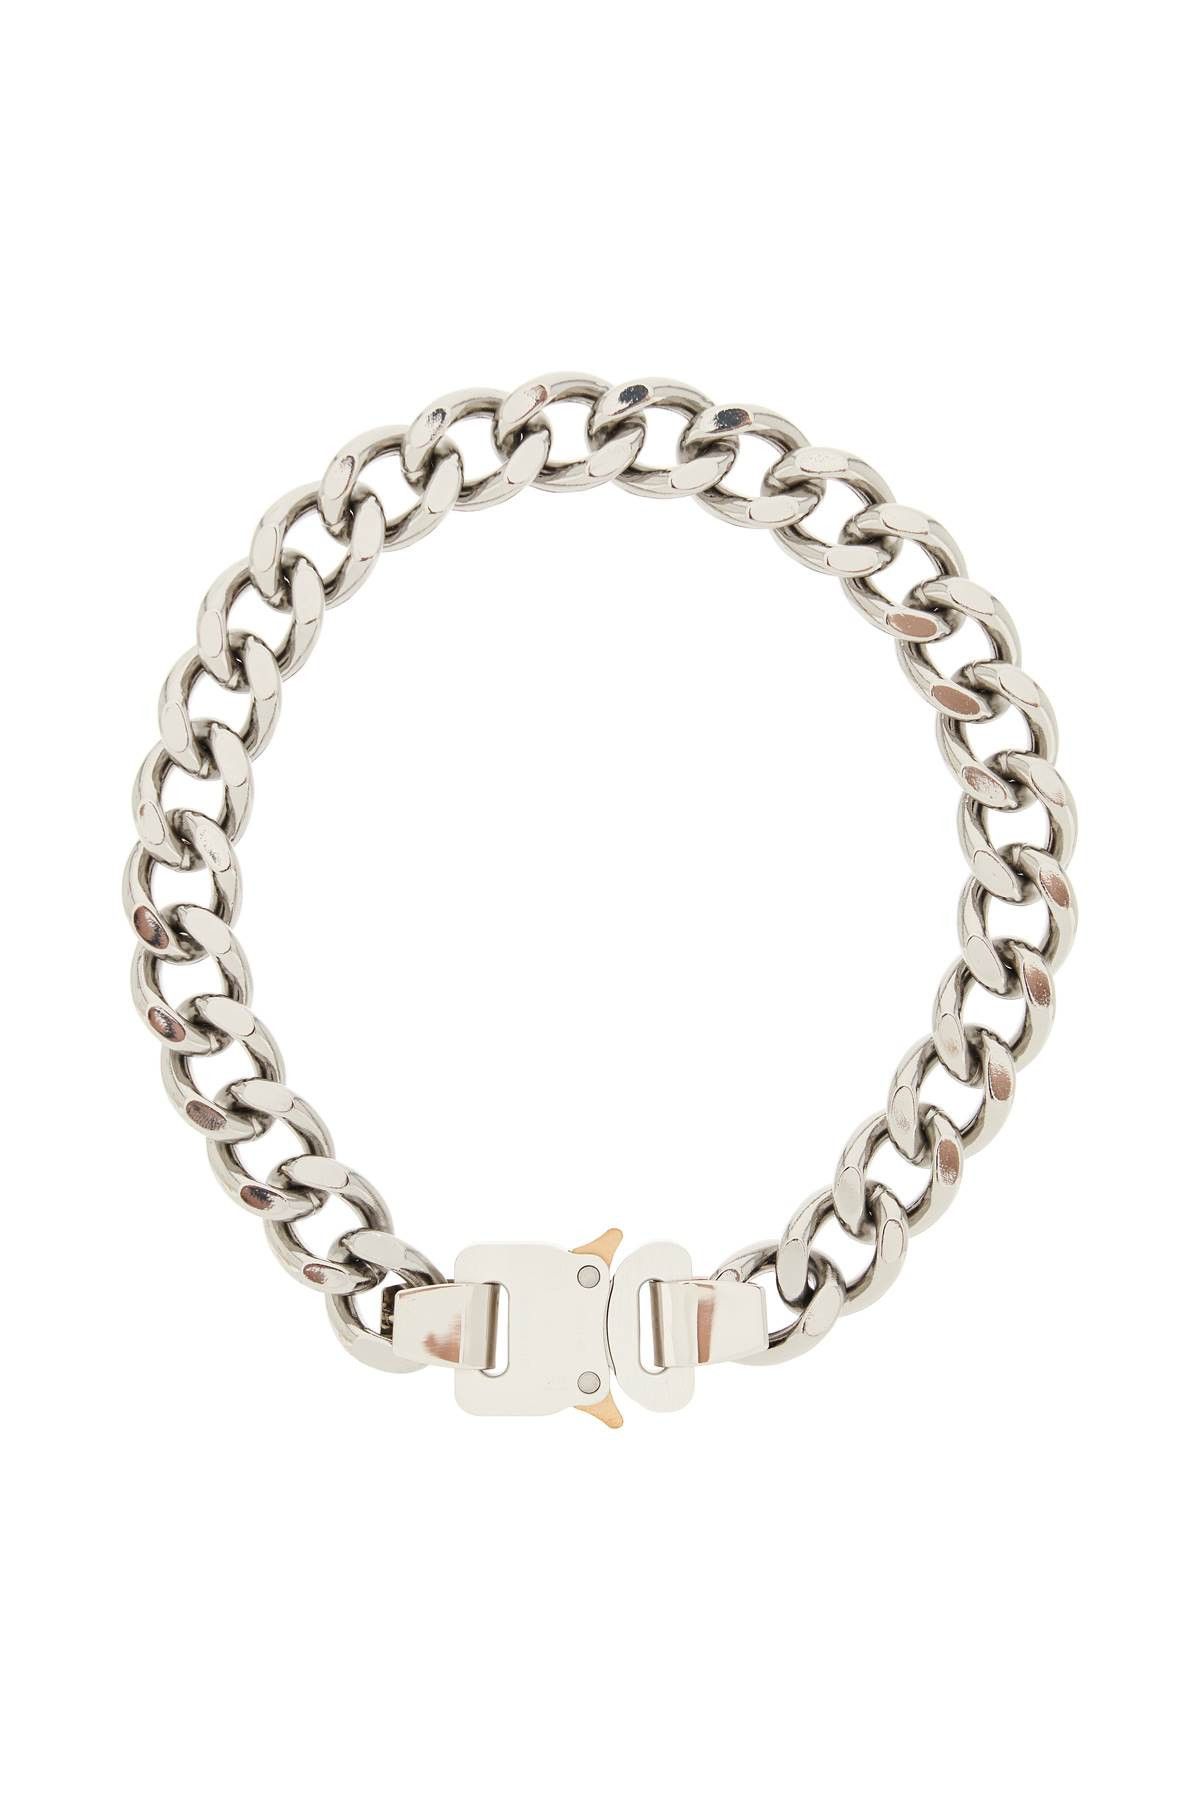 1017 ALYX 9SM 1017 alyx 9sm necklace with buckle | Grailed